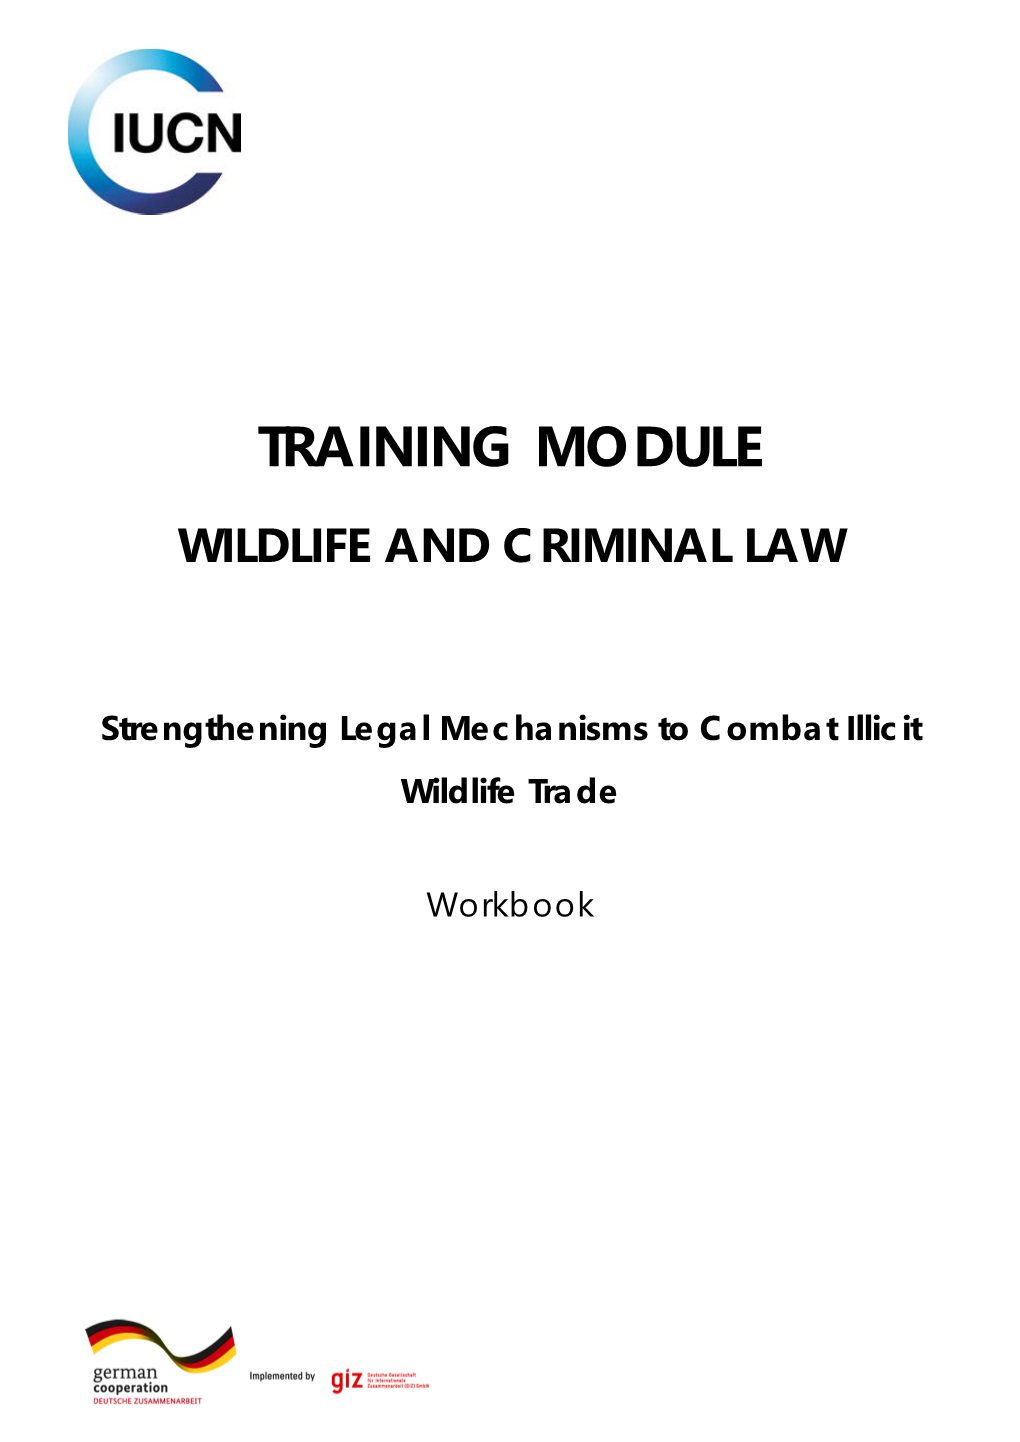 Wildlife and Criminal Law Workbook.Pdf